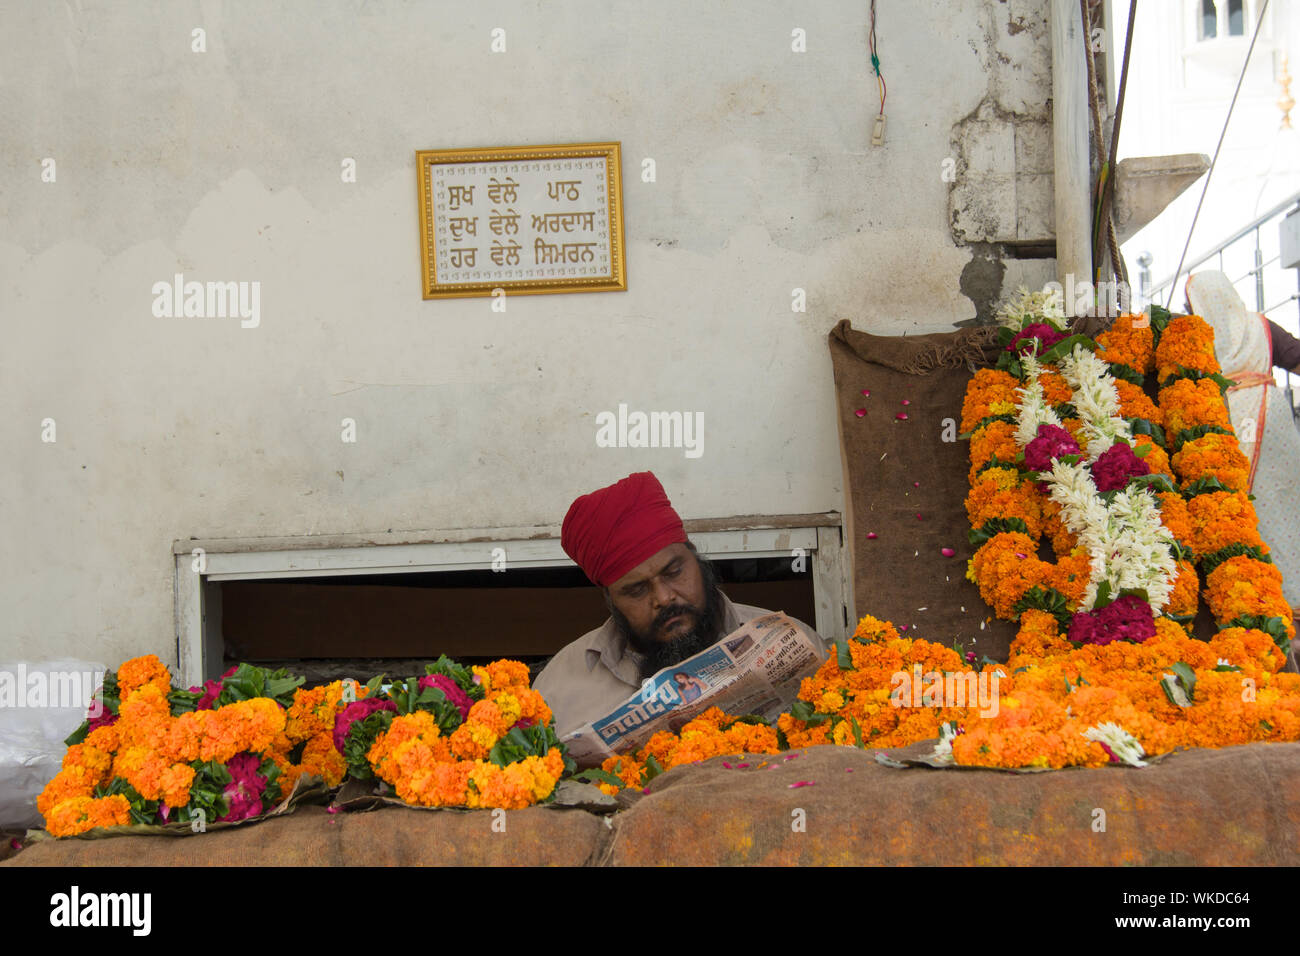 Man selling flowers in Gurudwara, Gurudwara Bangla Sahib, New Delhi, India Stock Photo